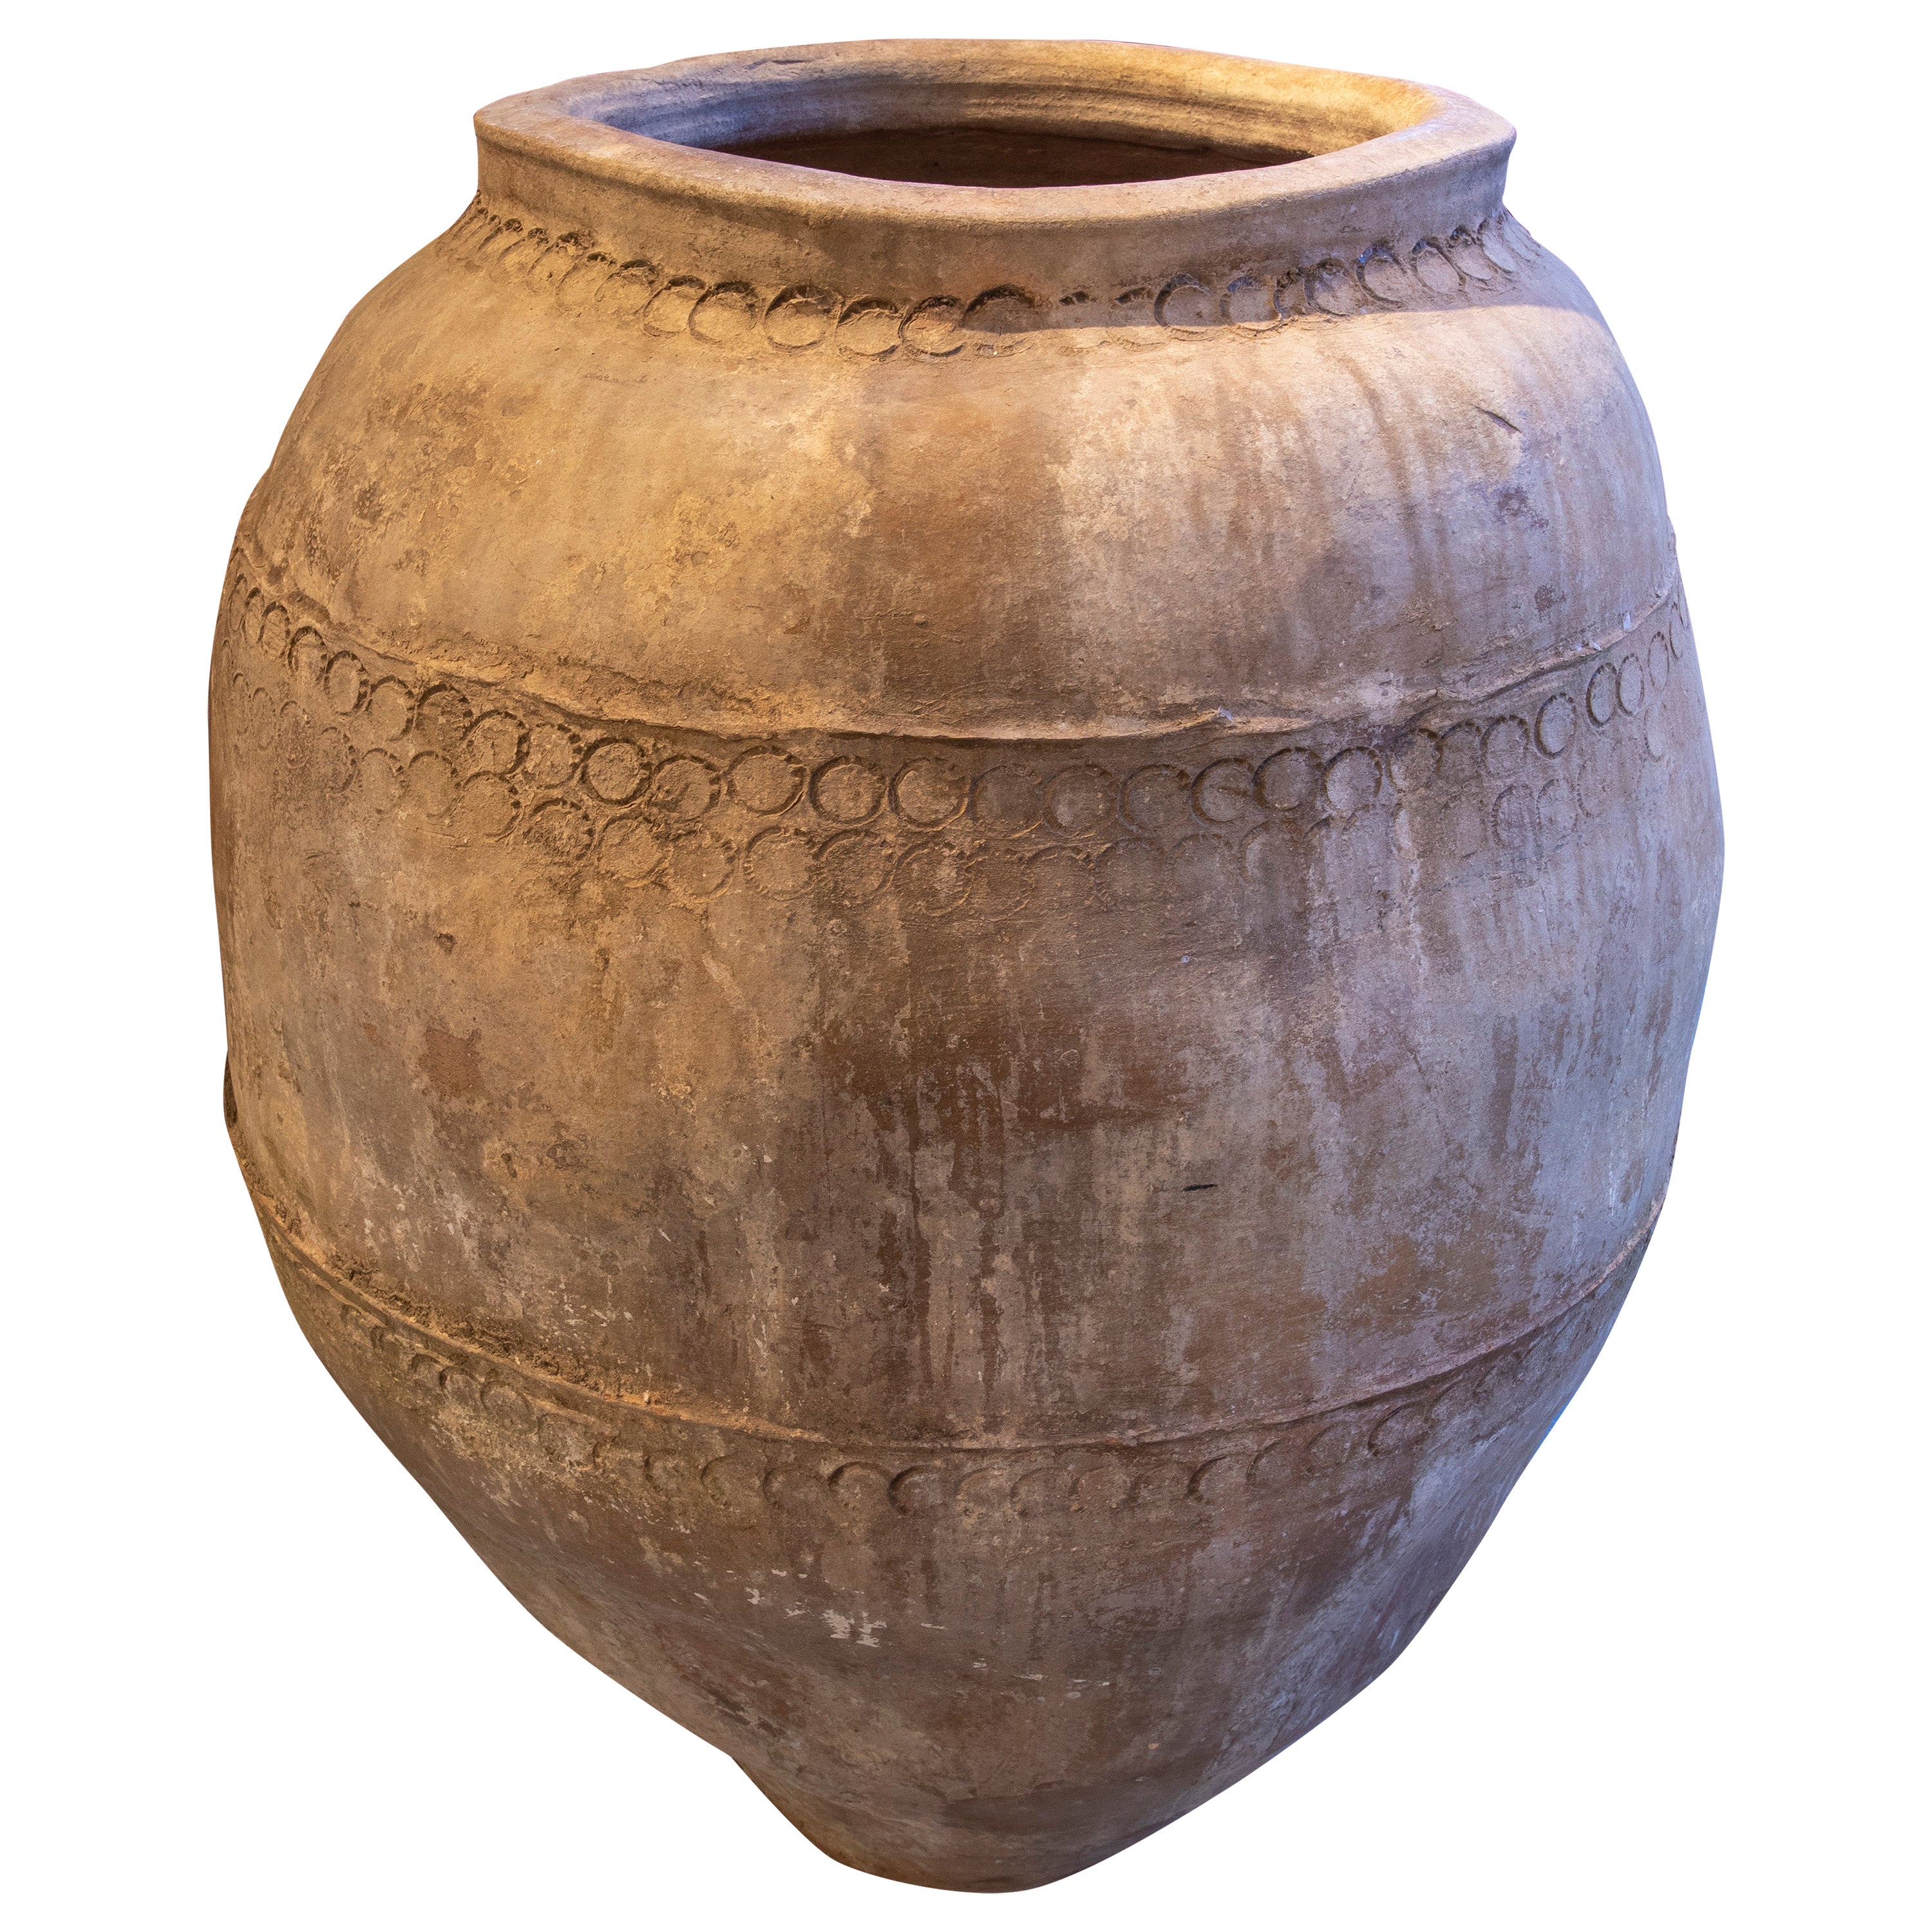 Spanish Handmade Ceramic Jar with Decorative Borders